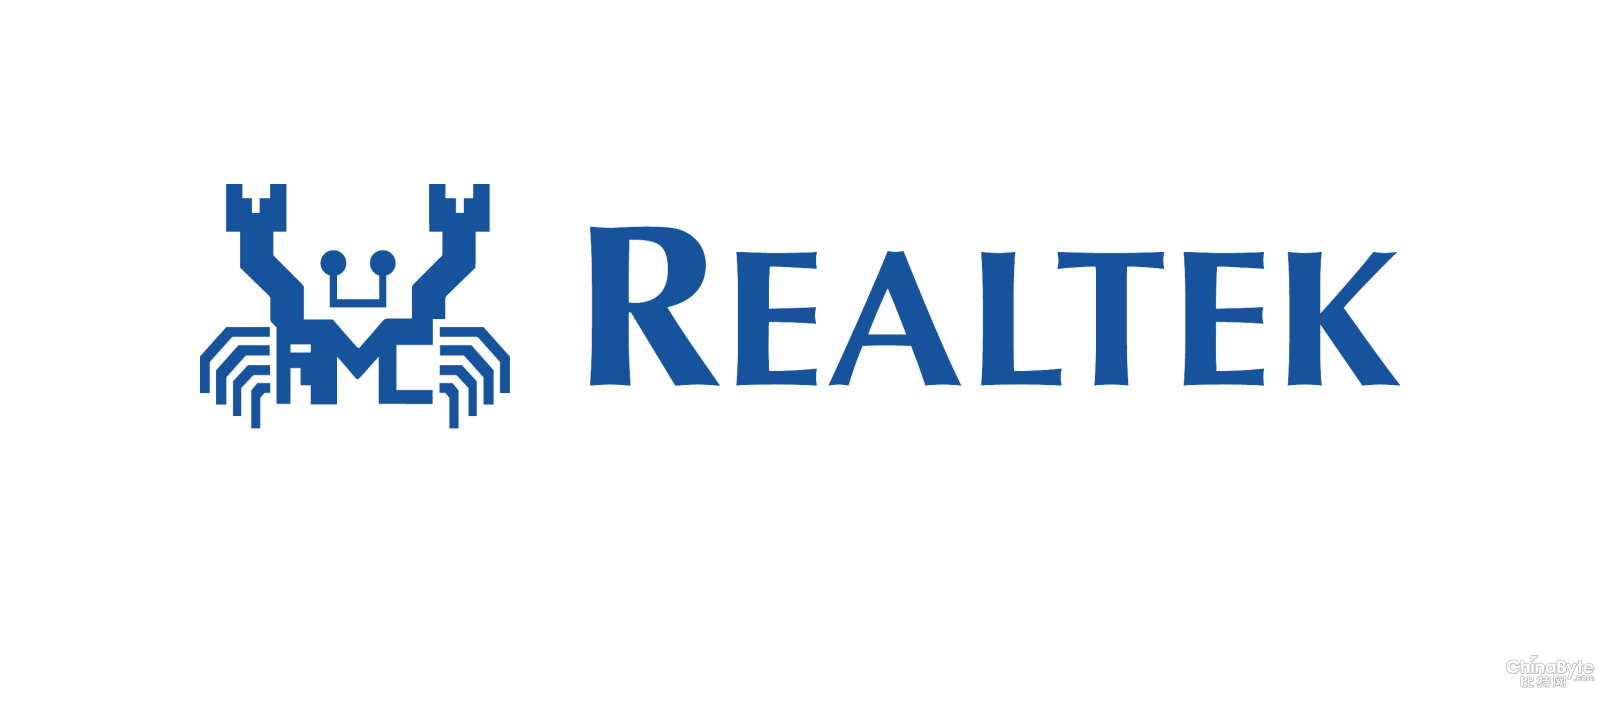 Realtek Ac`97 Audio Drivers For Xp Download